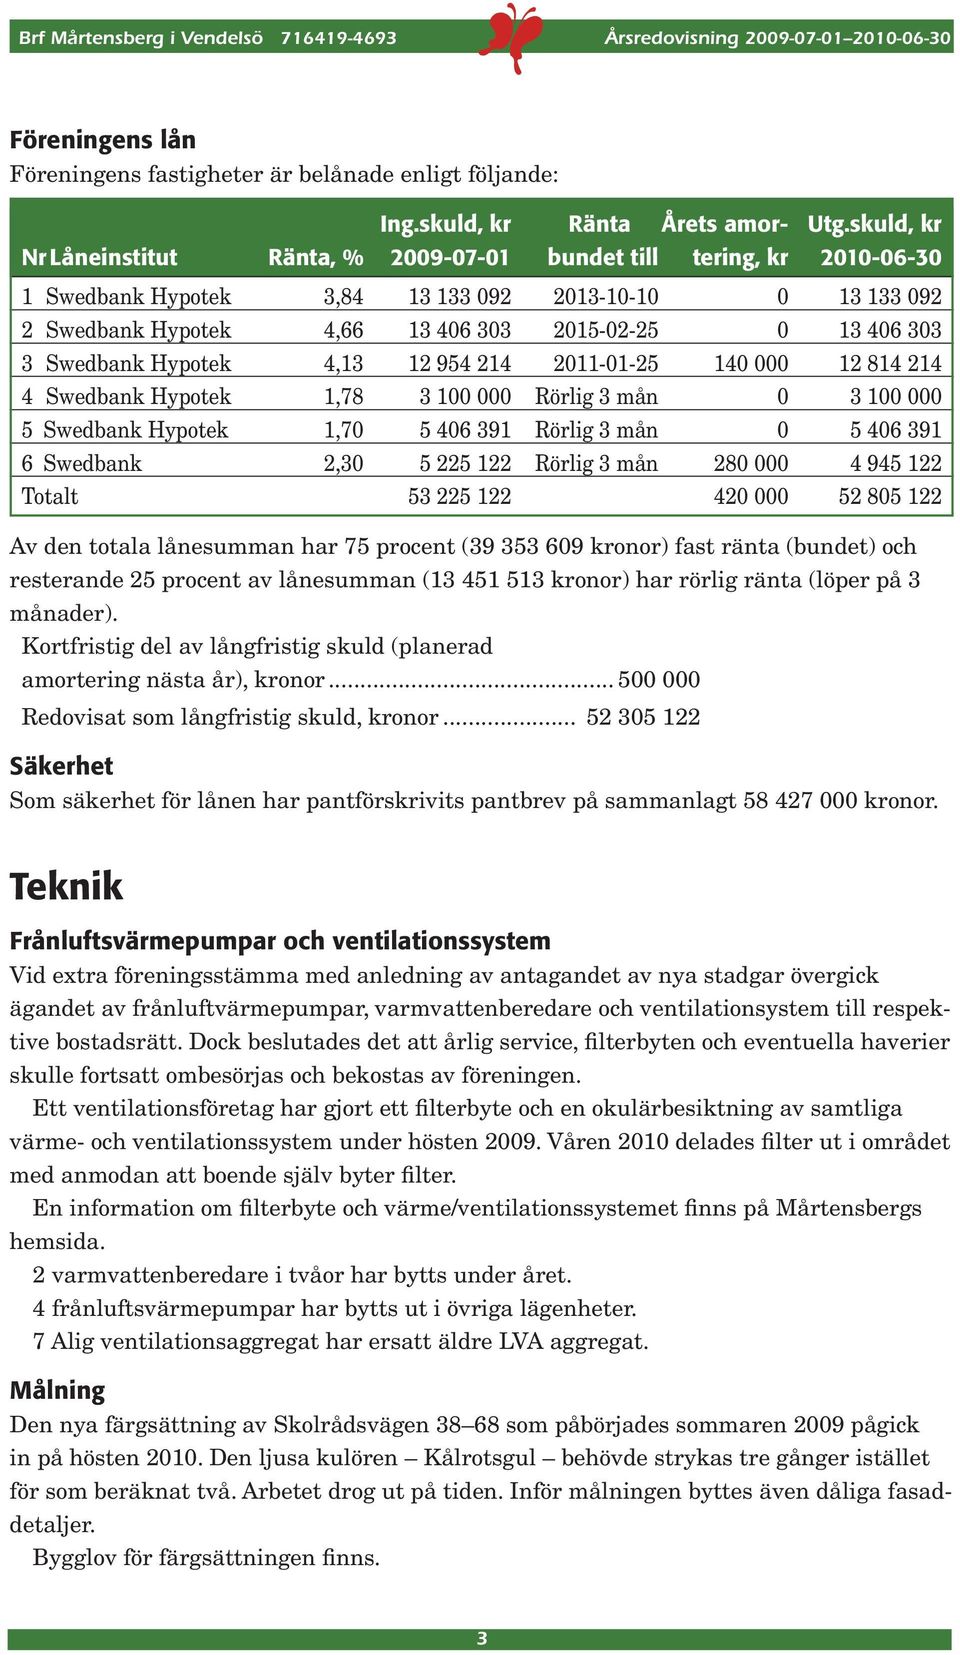 Swedbank Hypotek 4,13 12 954 214 2011-01-25 140 000 12 814 214 4 Swedbank Hypotek 1,78 3 100 000 Rörlig 3 mån 0 3 100 000 5 Swedbank Hypotek 1,70 5 406 391 Rörlig 3 mån 0 5 406 391 6 Swedbank 2,30 5